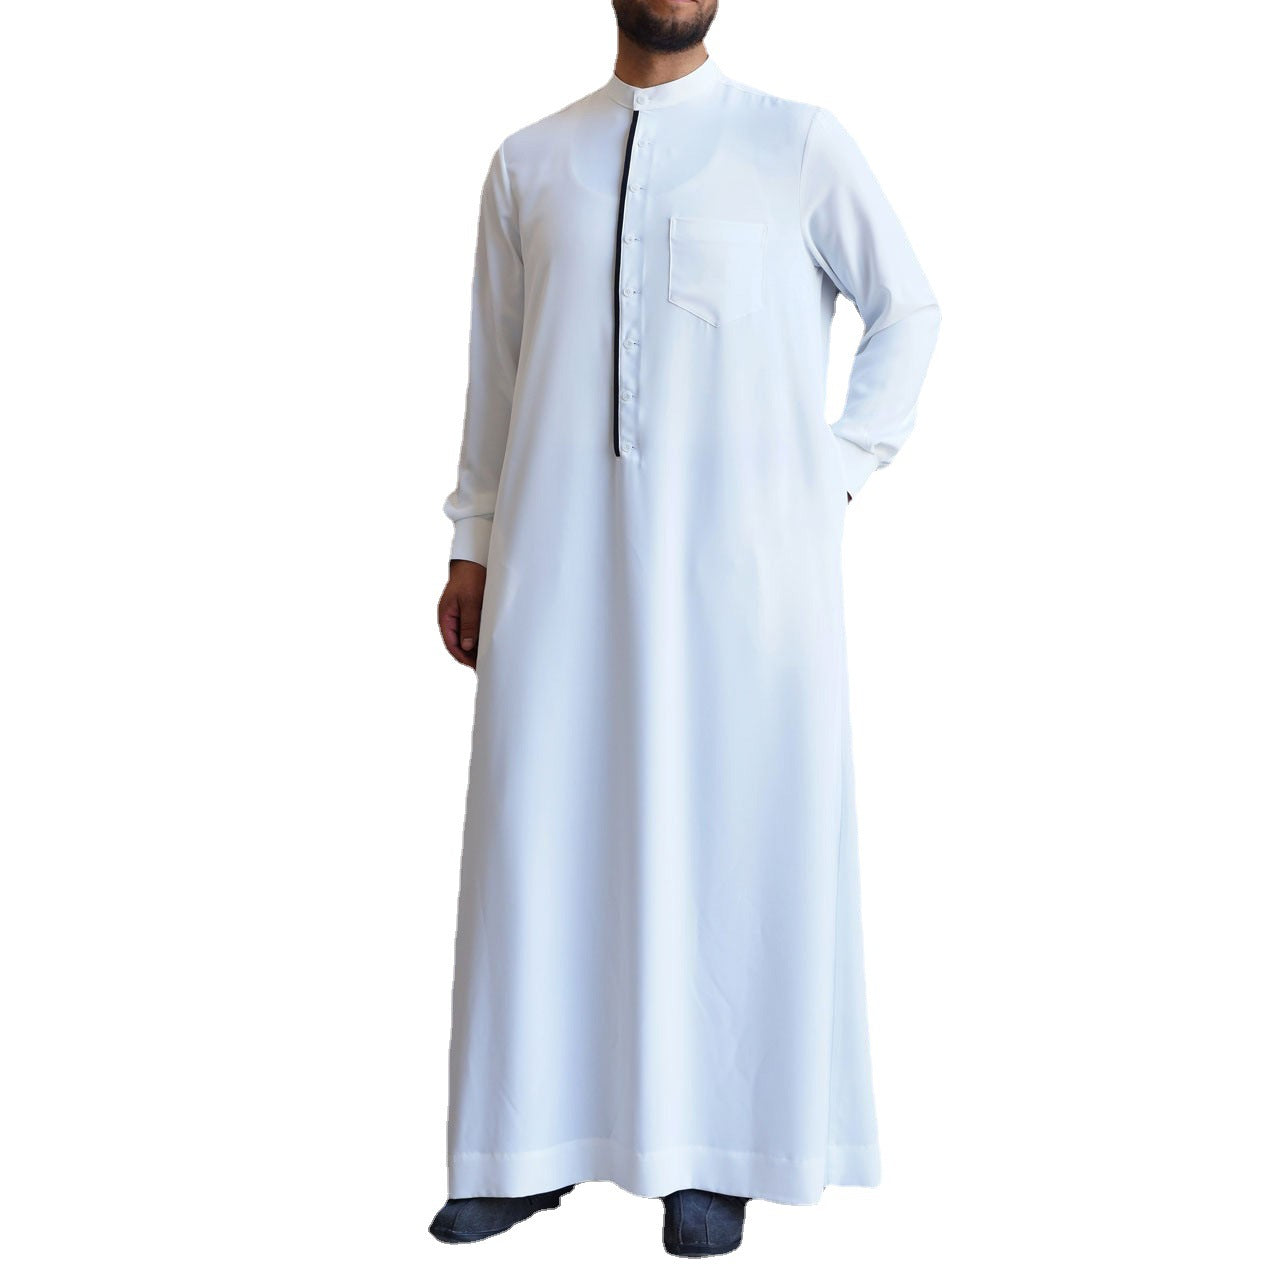 Men's Fashion Casual White Button Down Muslim Robe